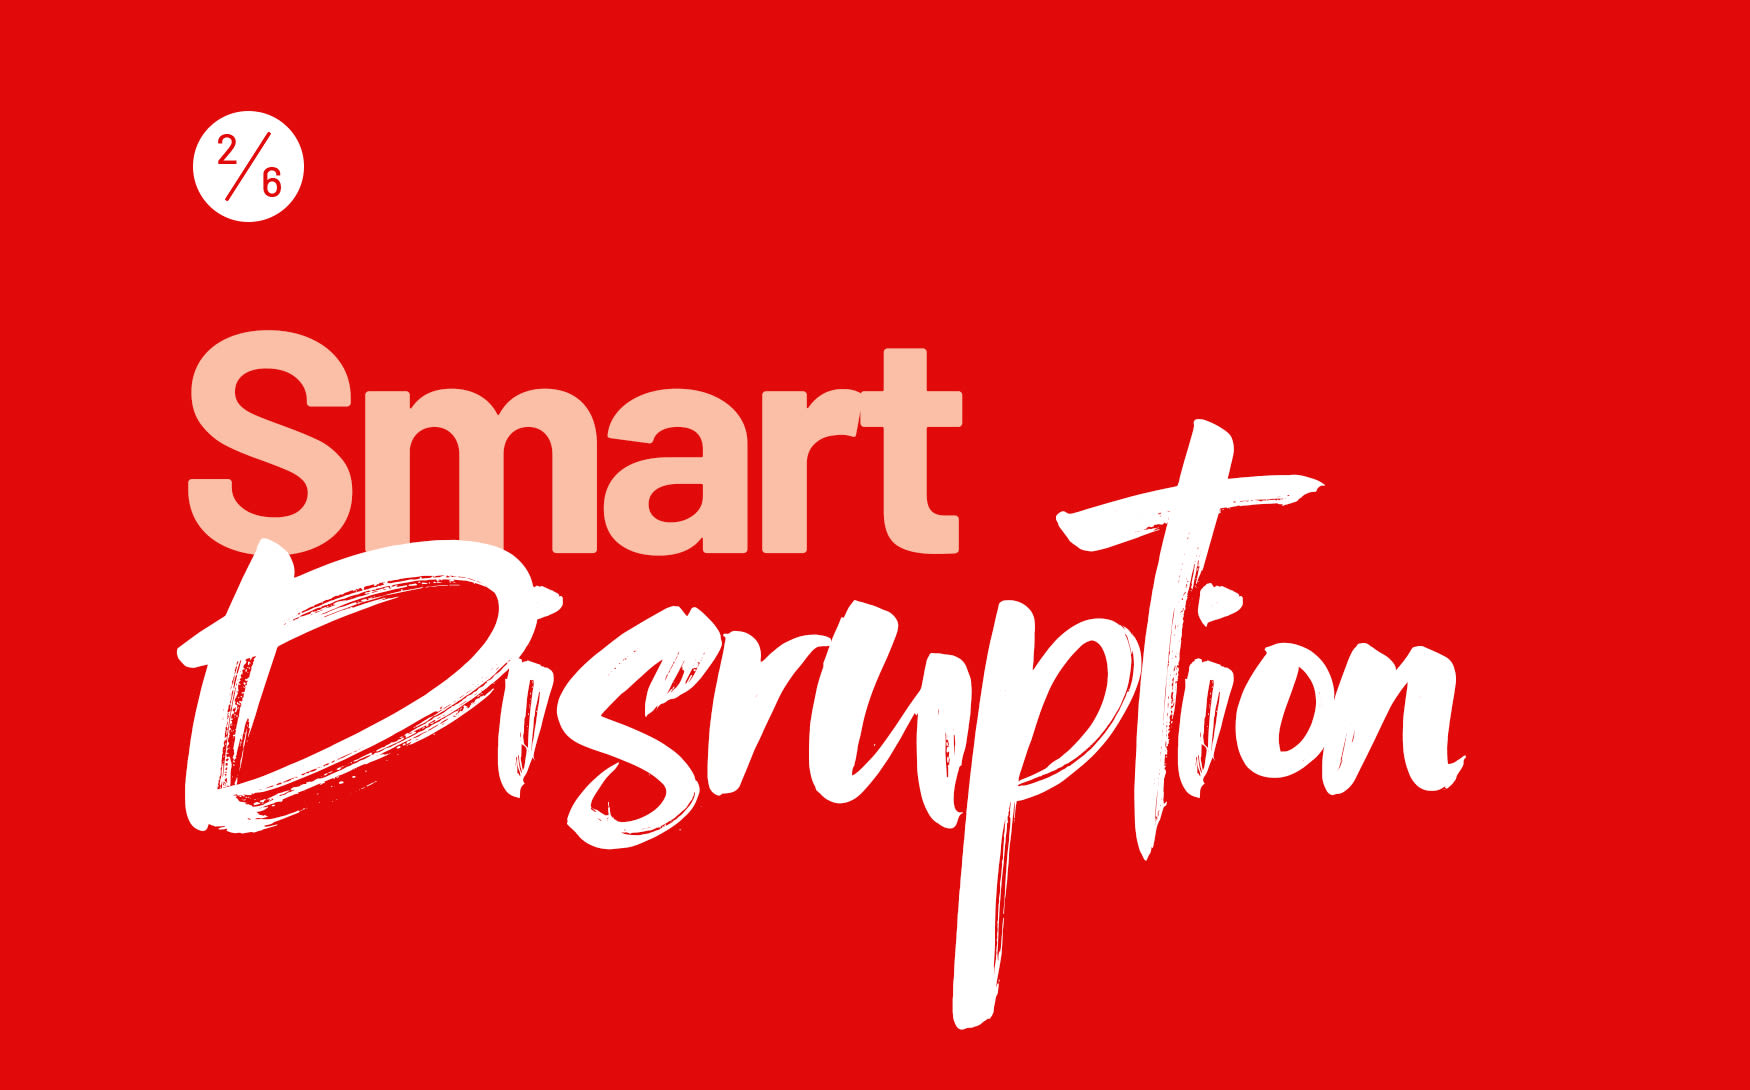 Smart disruption